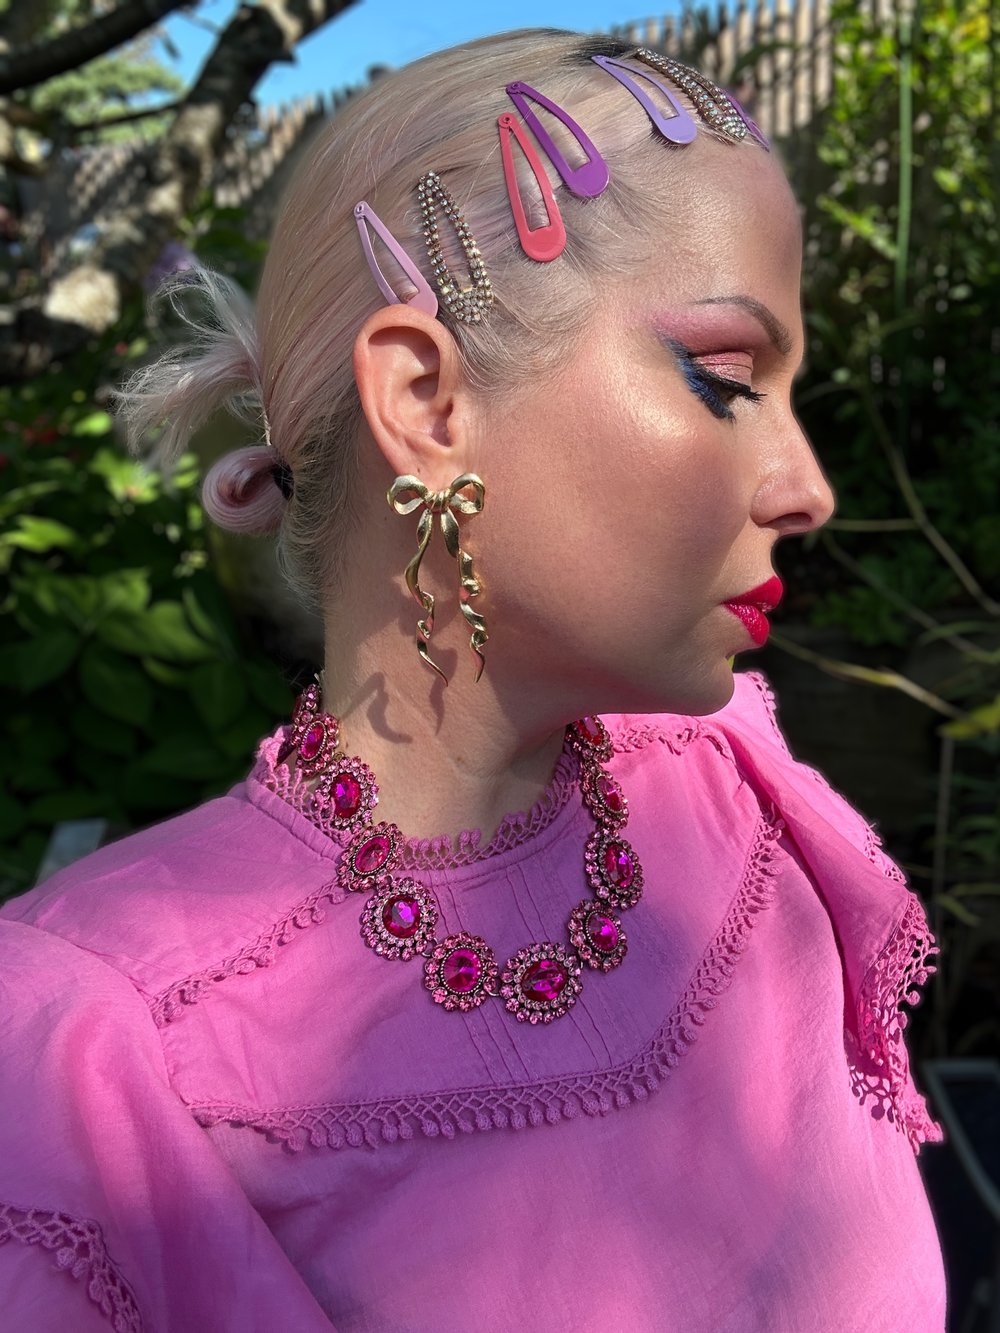  French Girl Aesthetic    Pink Reef   bow earrings    EyeCandy LA   necklace    Mango   top  Location:   Salem, MA    Model:   Debra Macki   